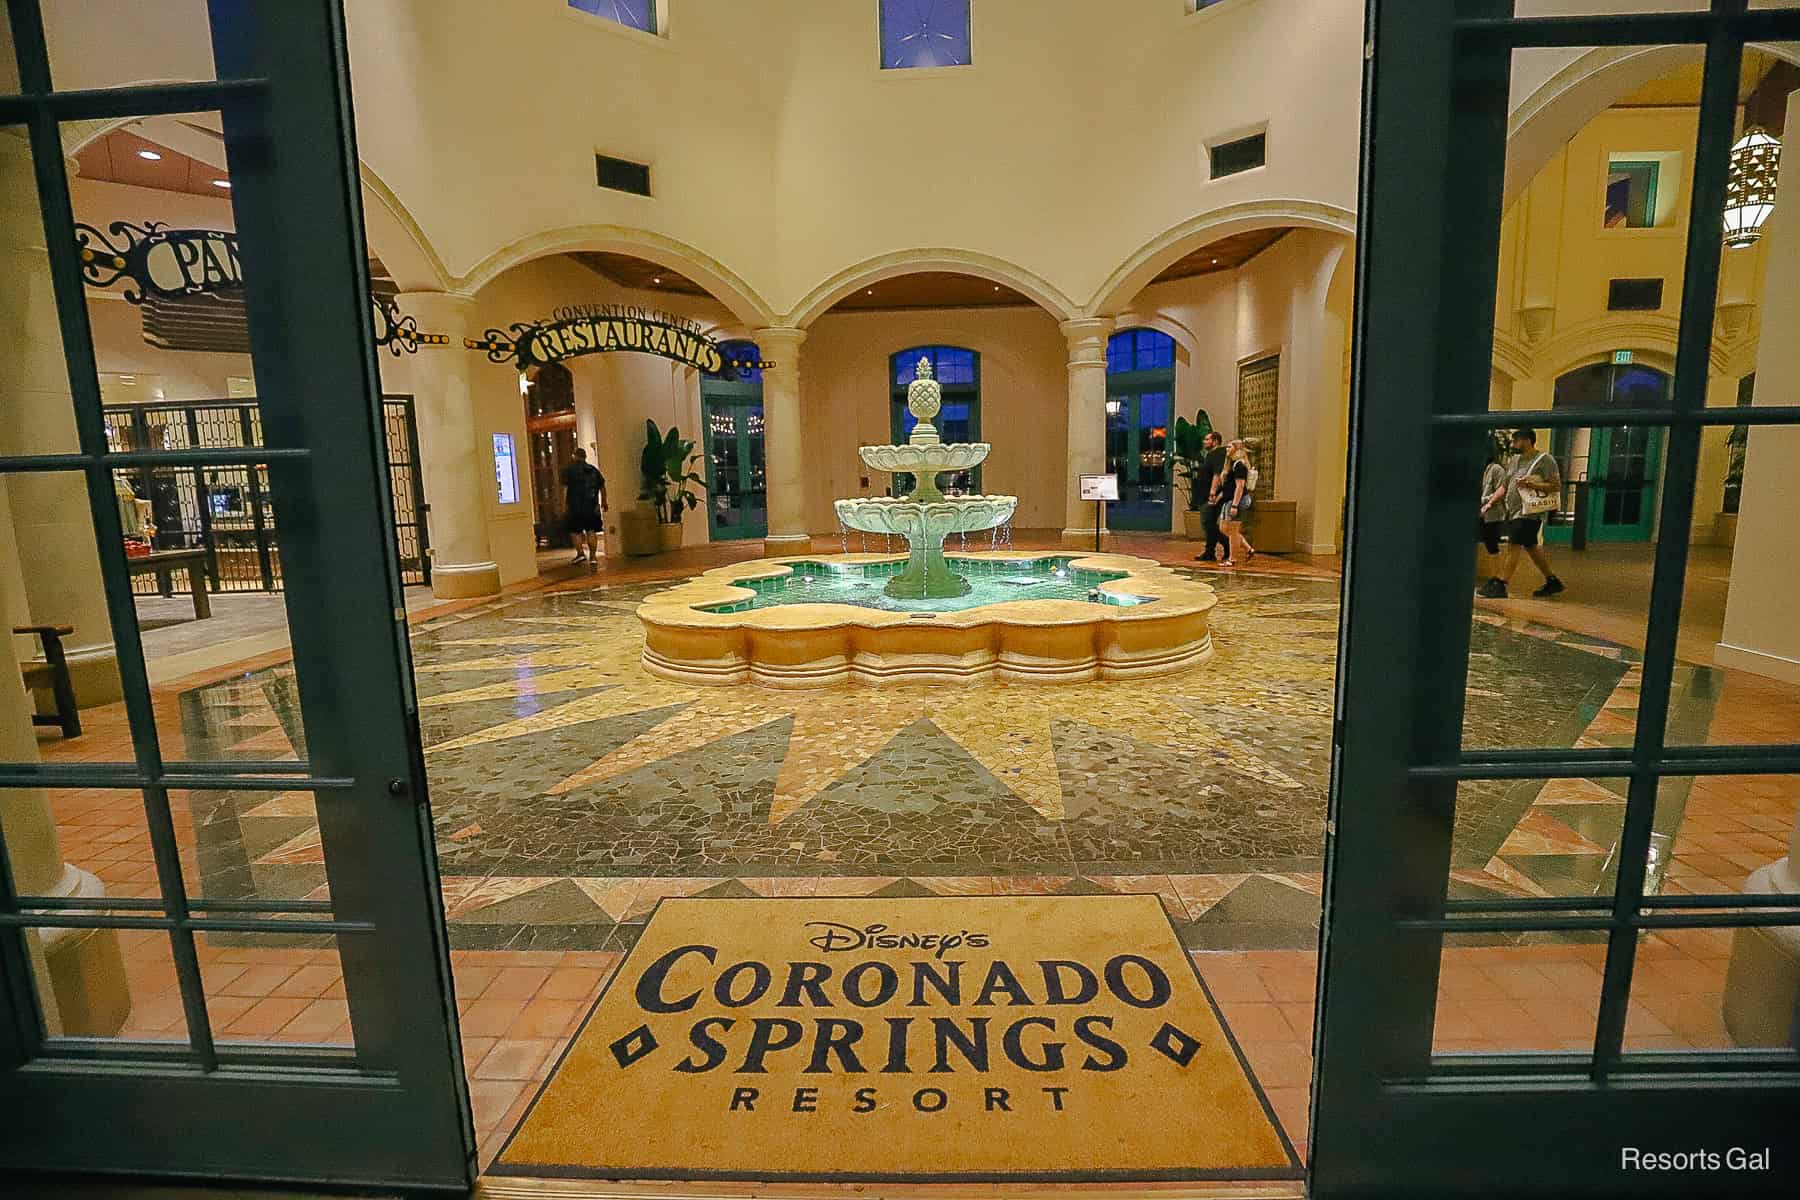 the lobby entrance of Disney's Coronado Springs Resort 